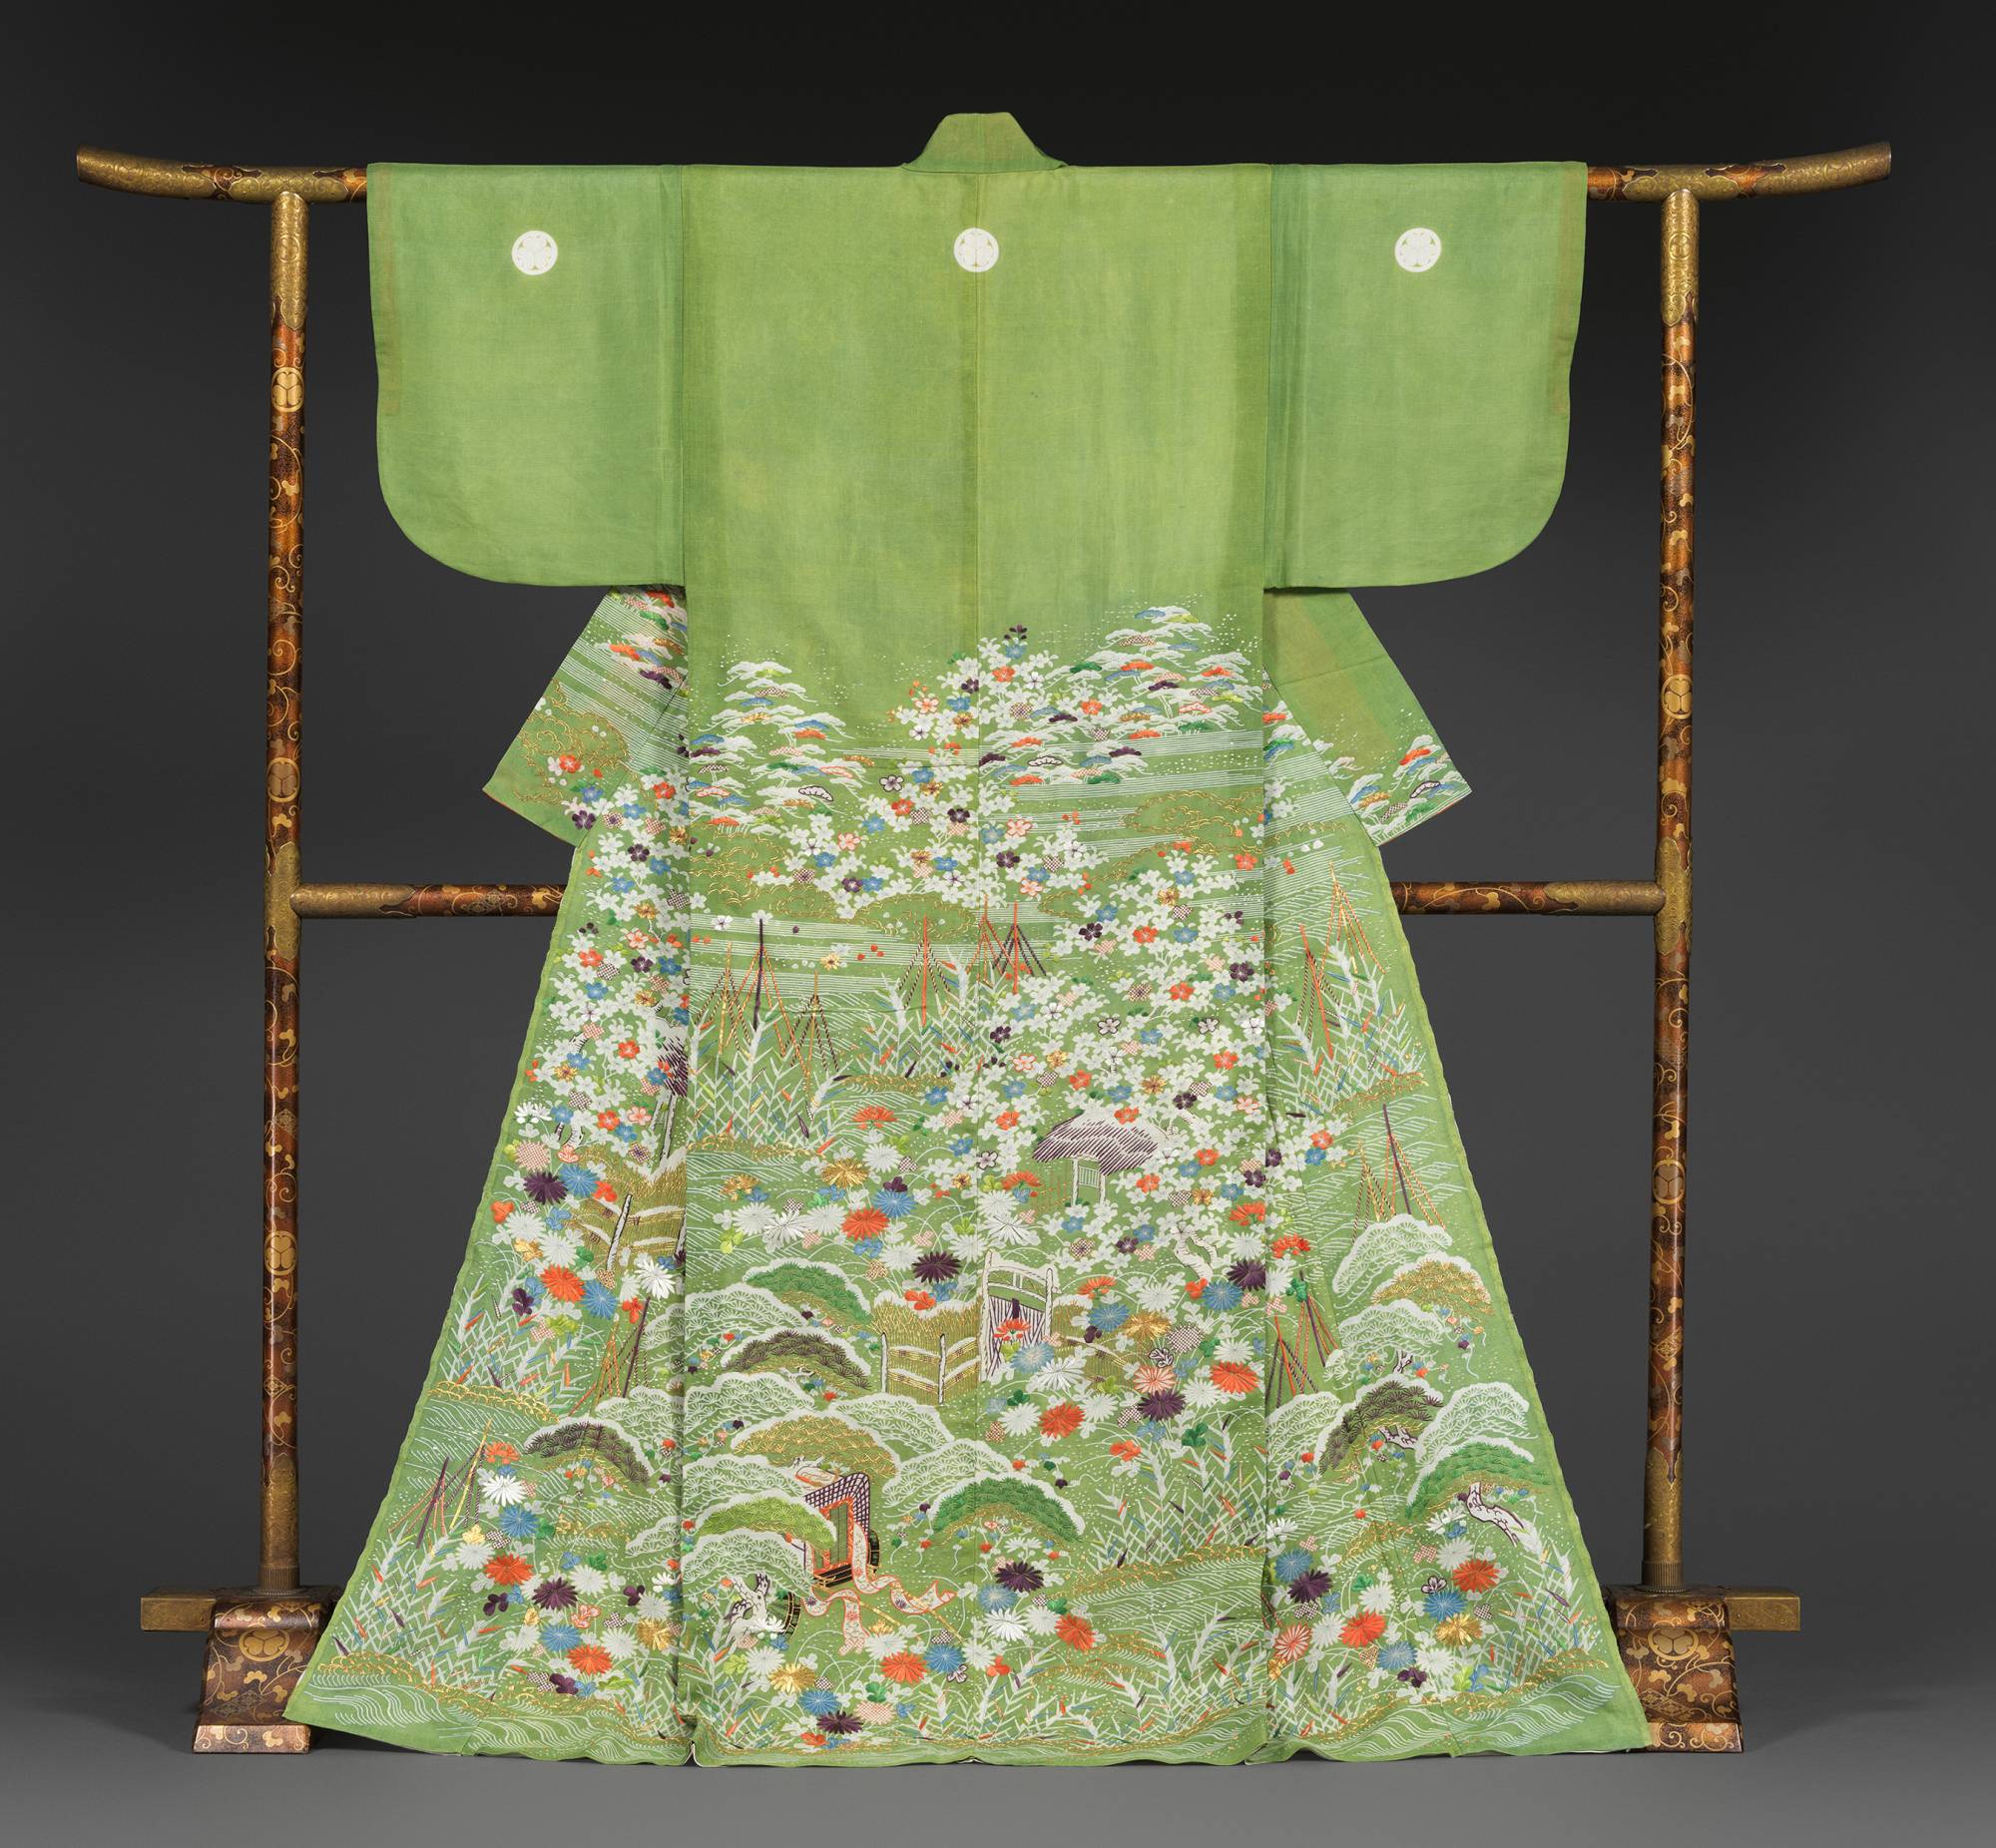 Kimono Designs: 9 Must-See Japanese Masterpieces